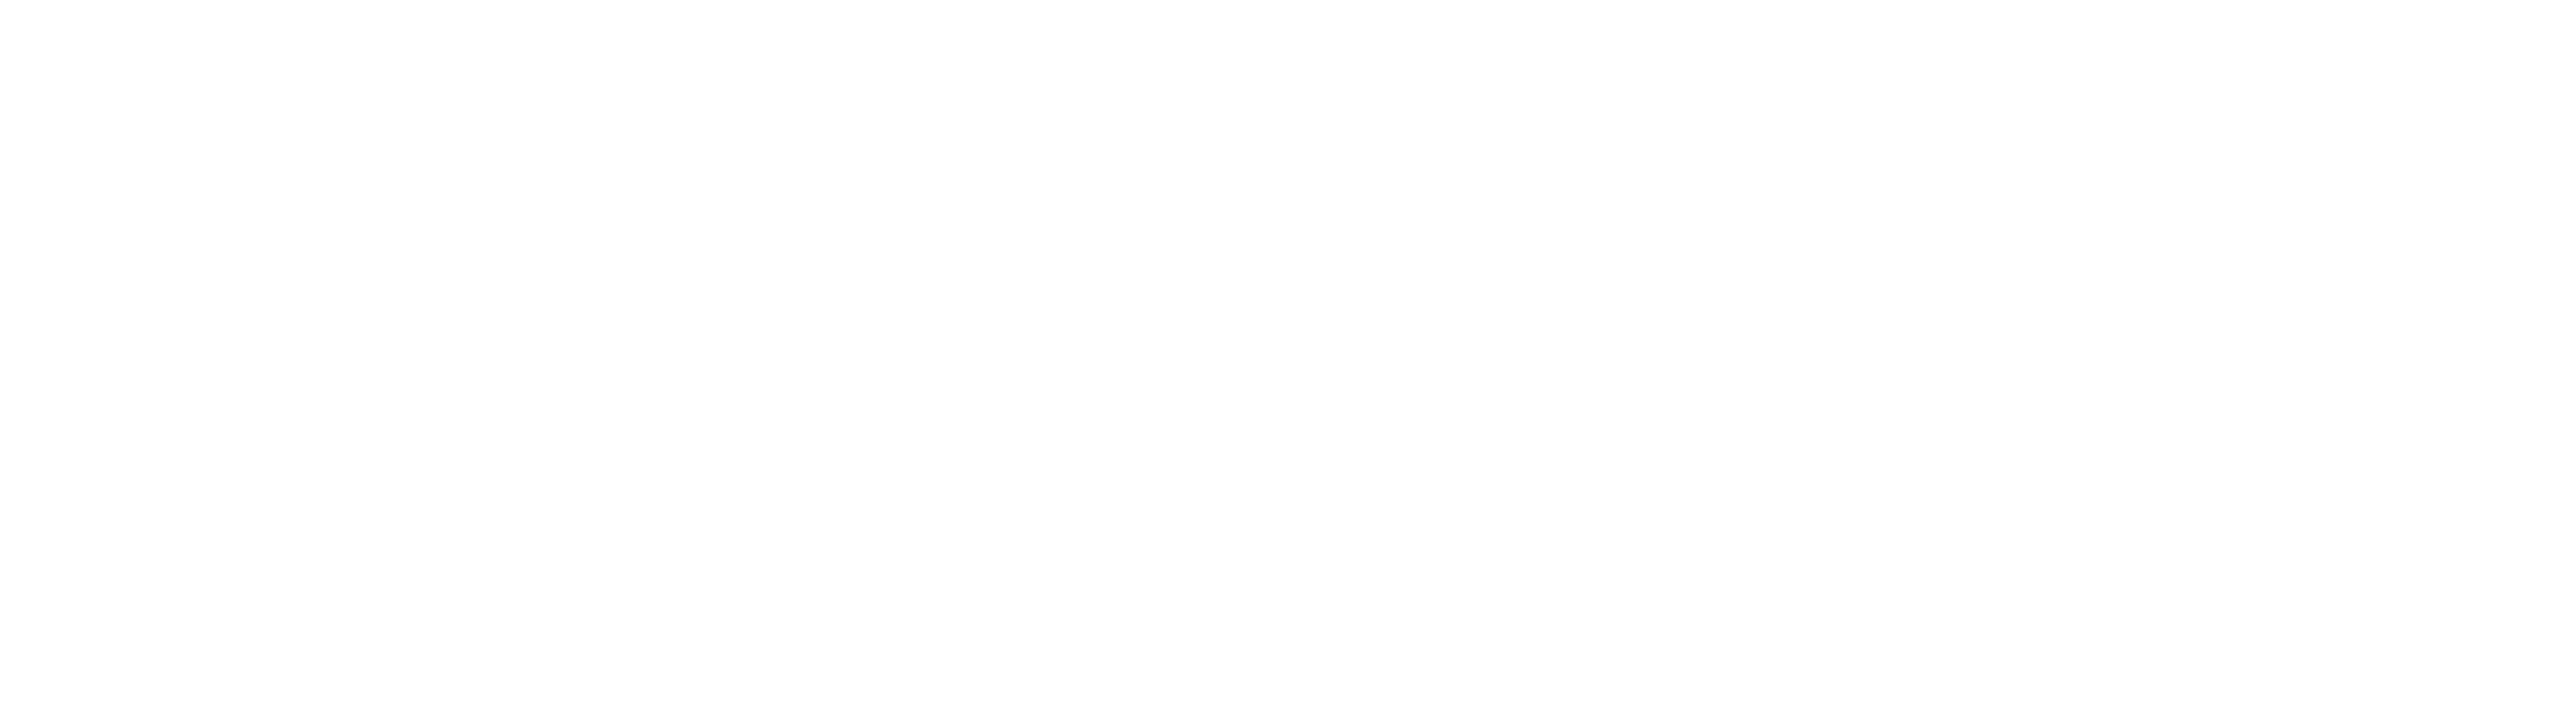 PHG Anoxic Brain Injury, Inc.